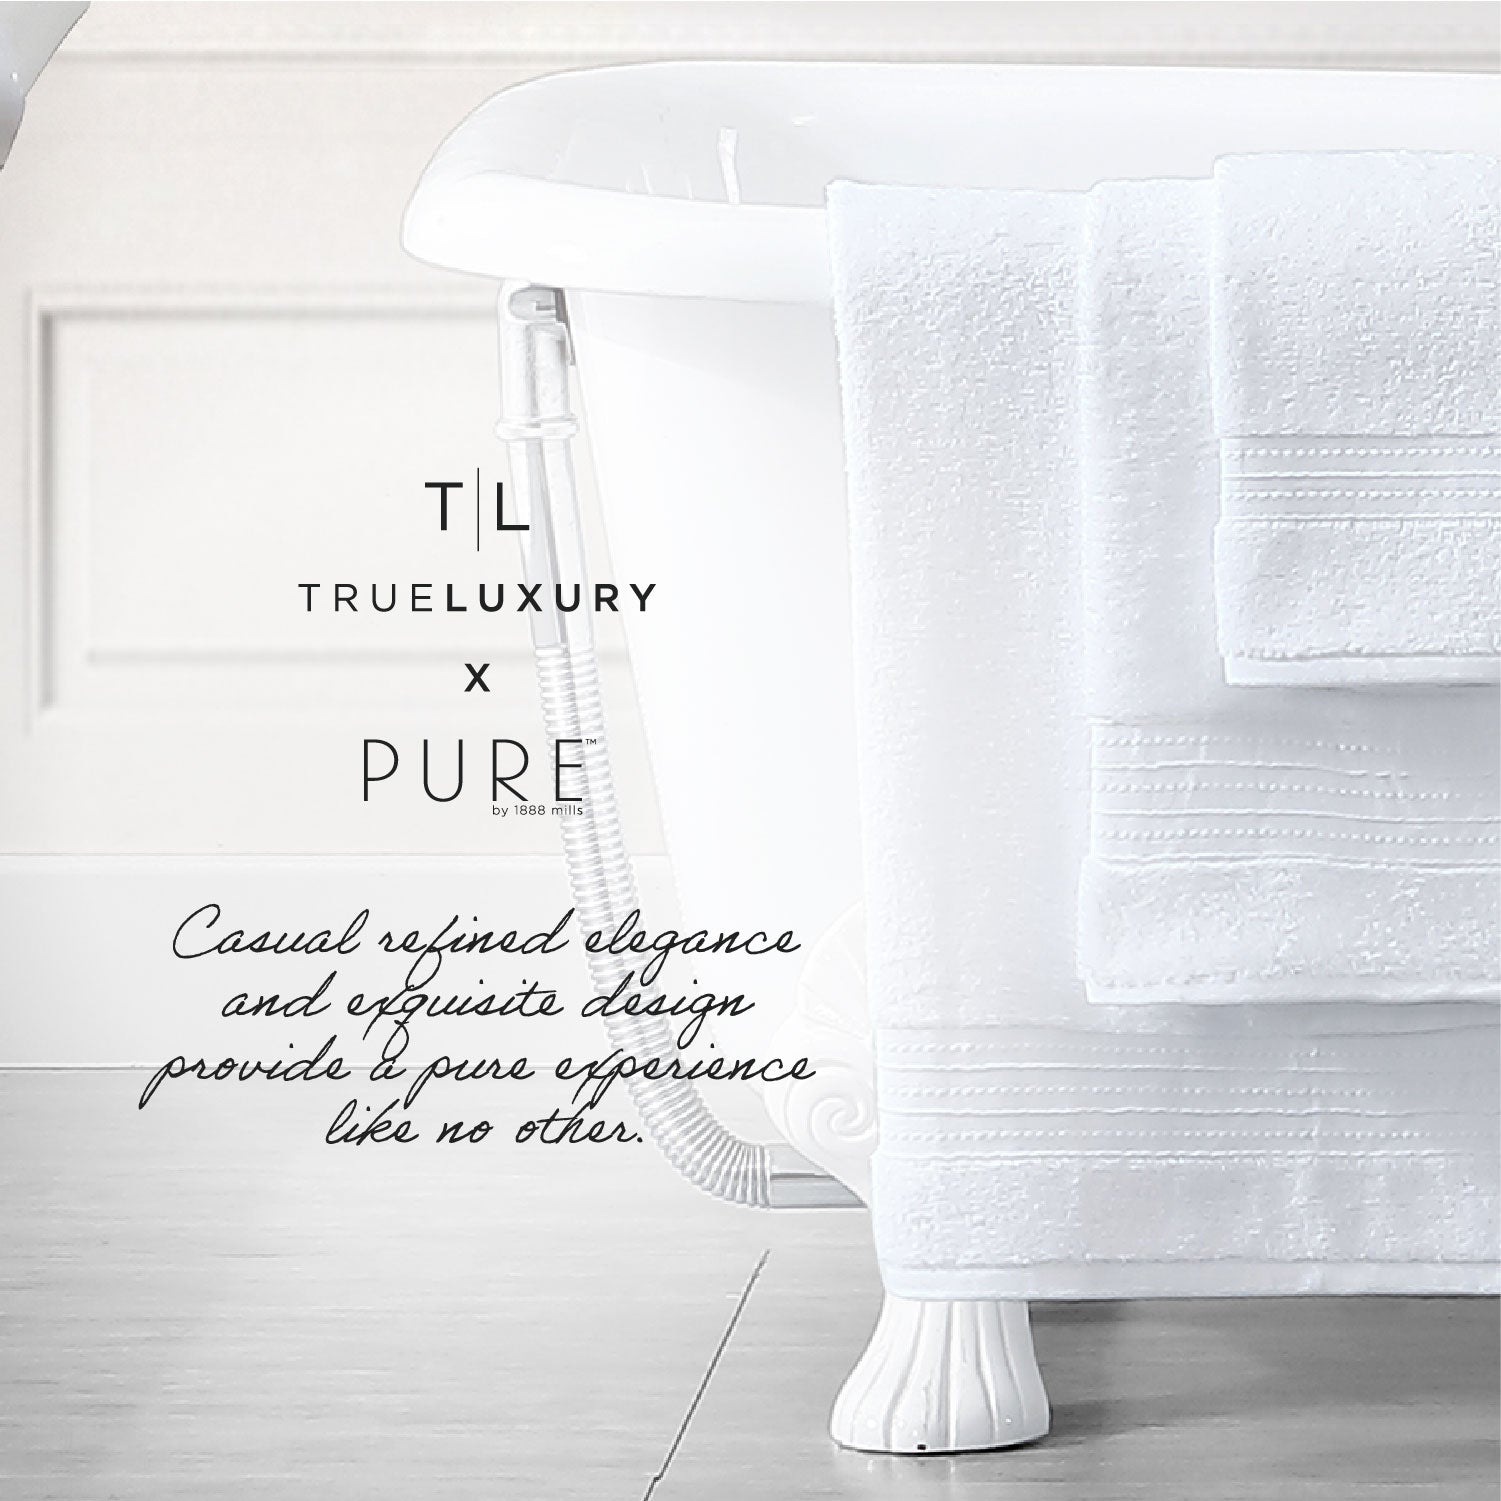 1888 Mills Pure Terry Bath Towels 30x56 100% Supima Cotton Loops White 2 Dz  Per Case